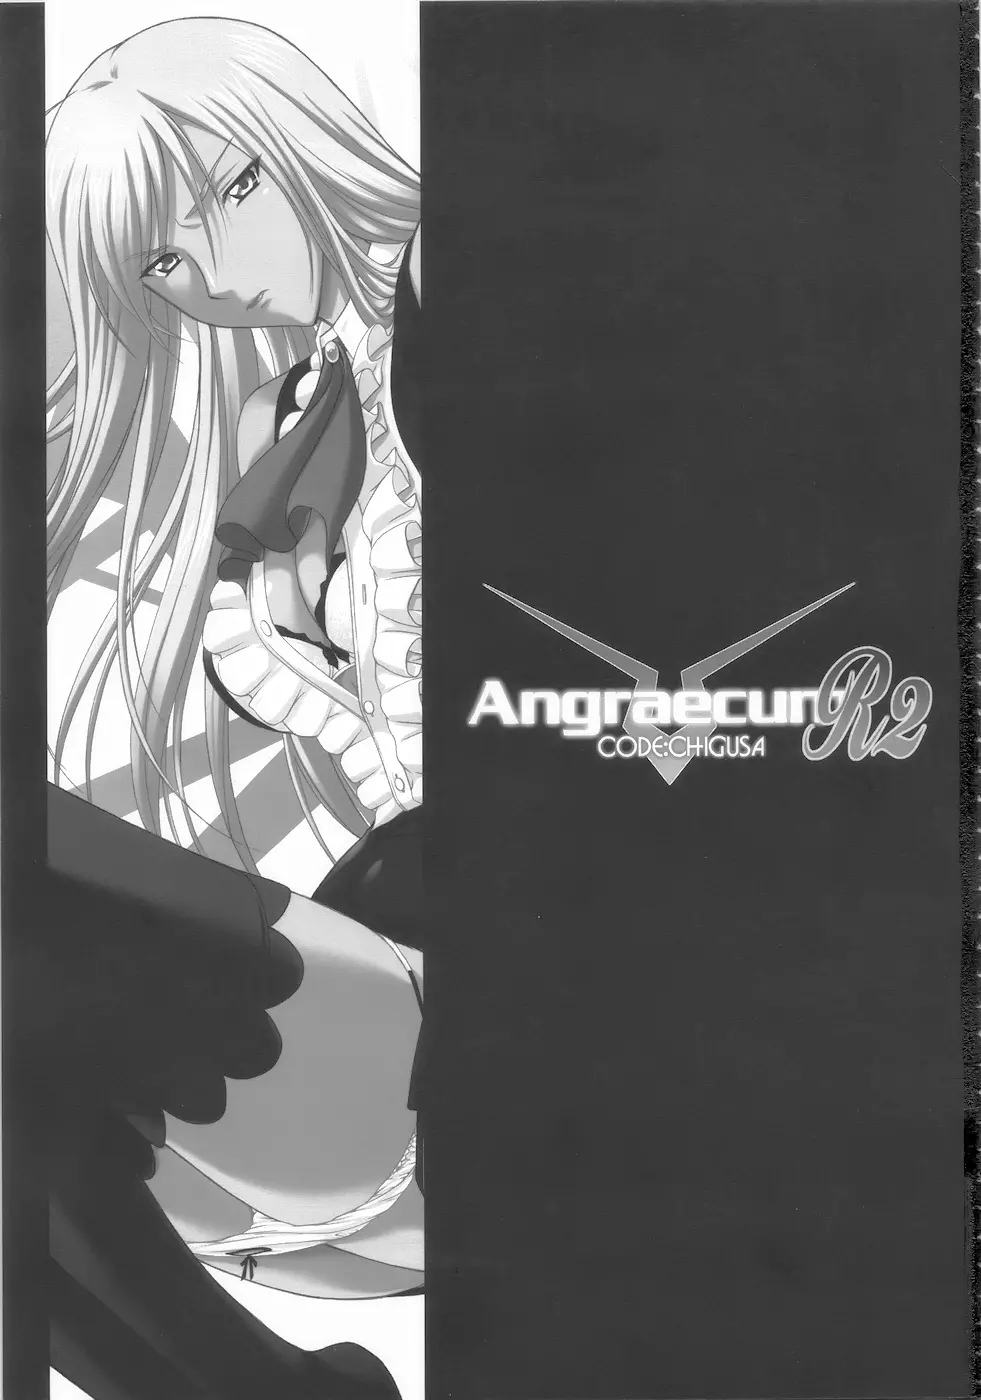 Angraecum R2 ~ Code: Chigusa Page.3